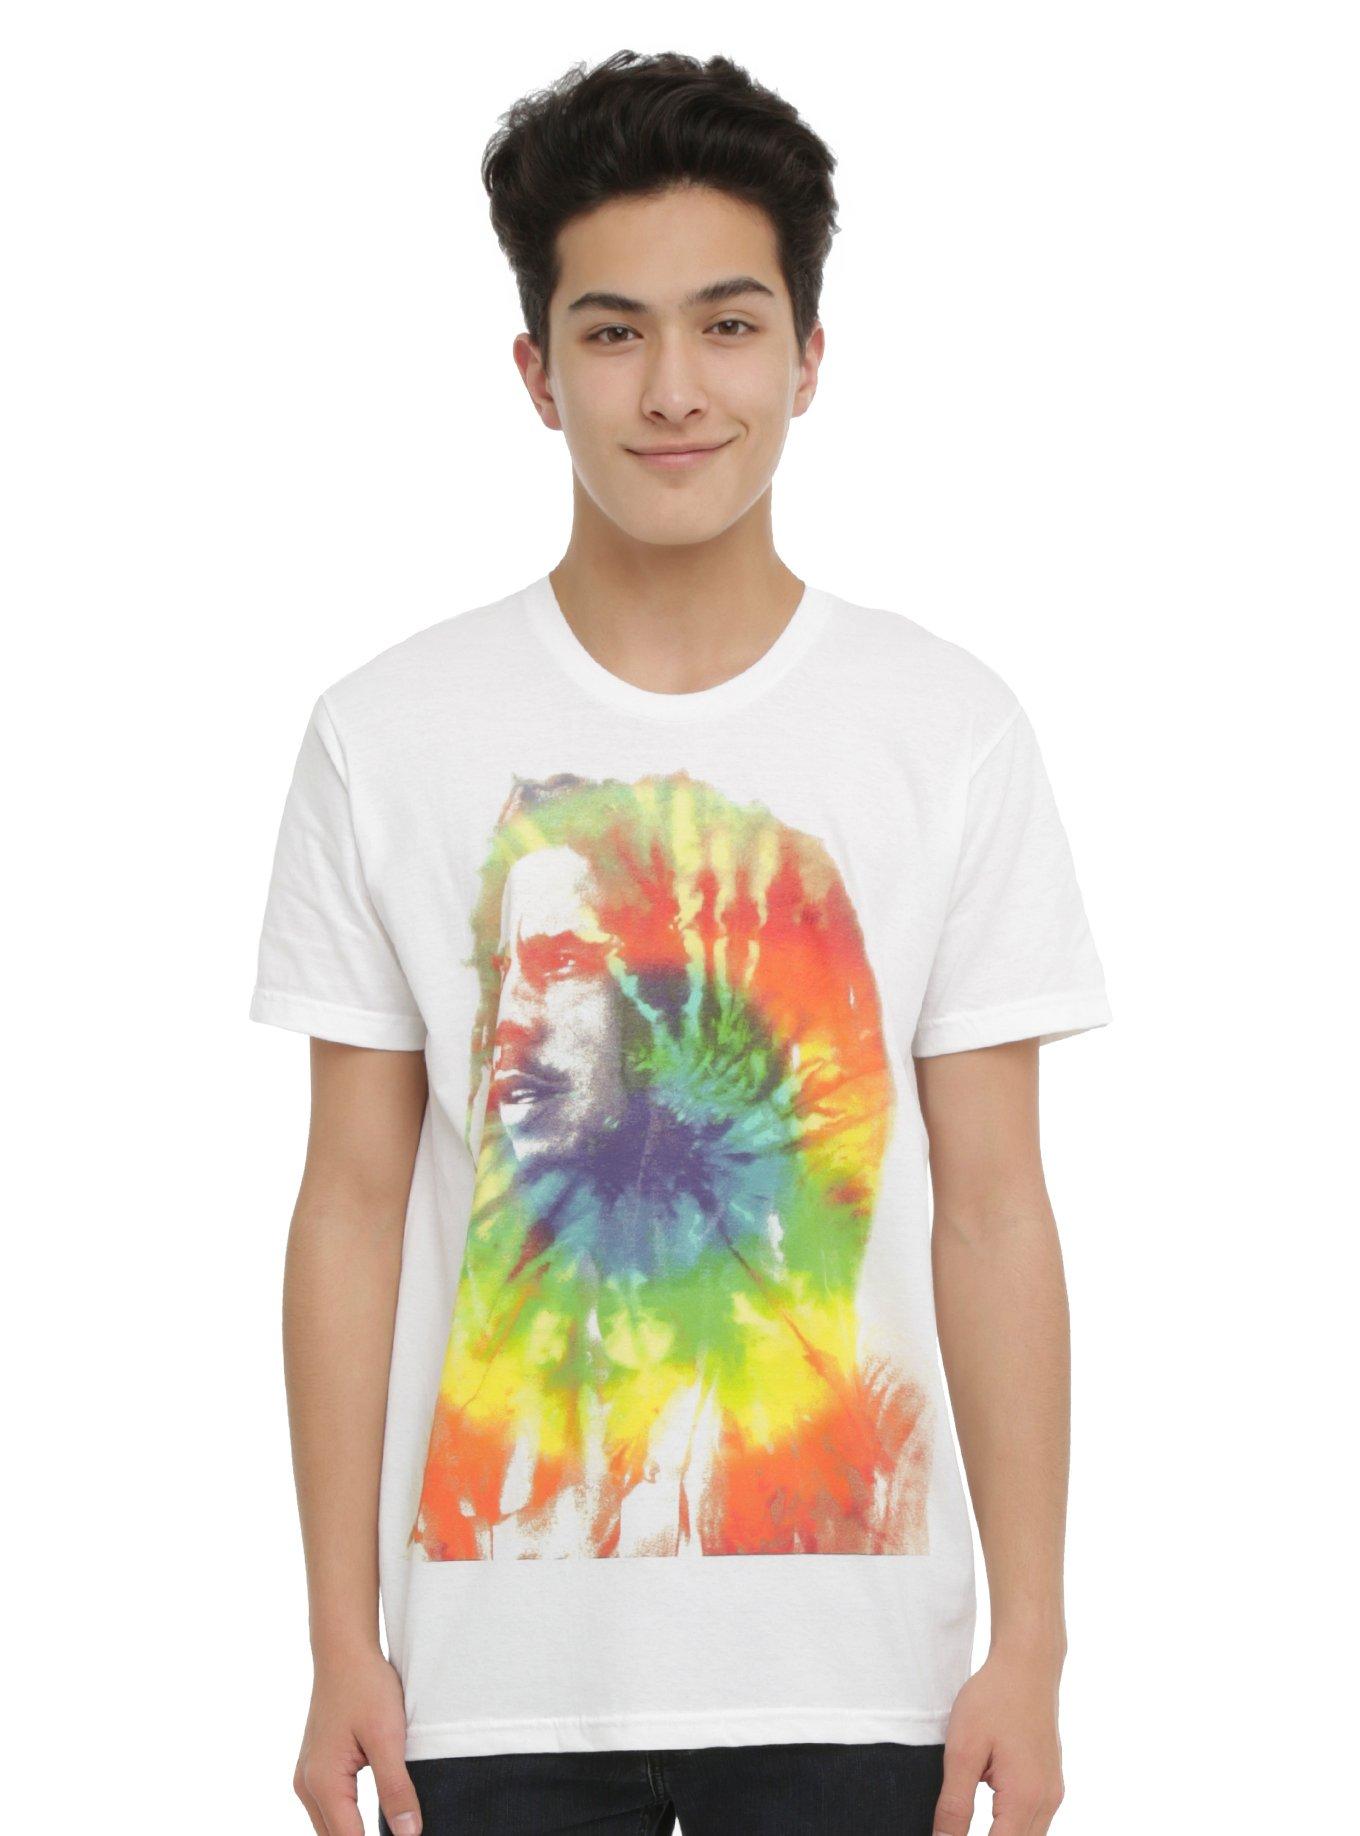 Bob Marley Tie Dye Portrait T-Shirt, , hi-res